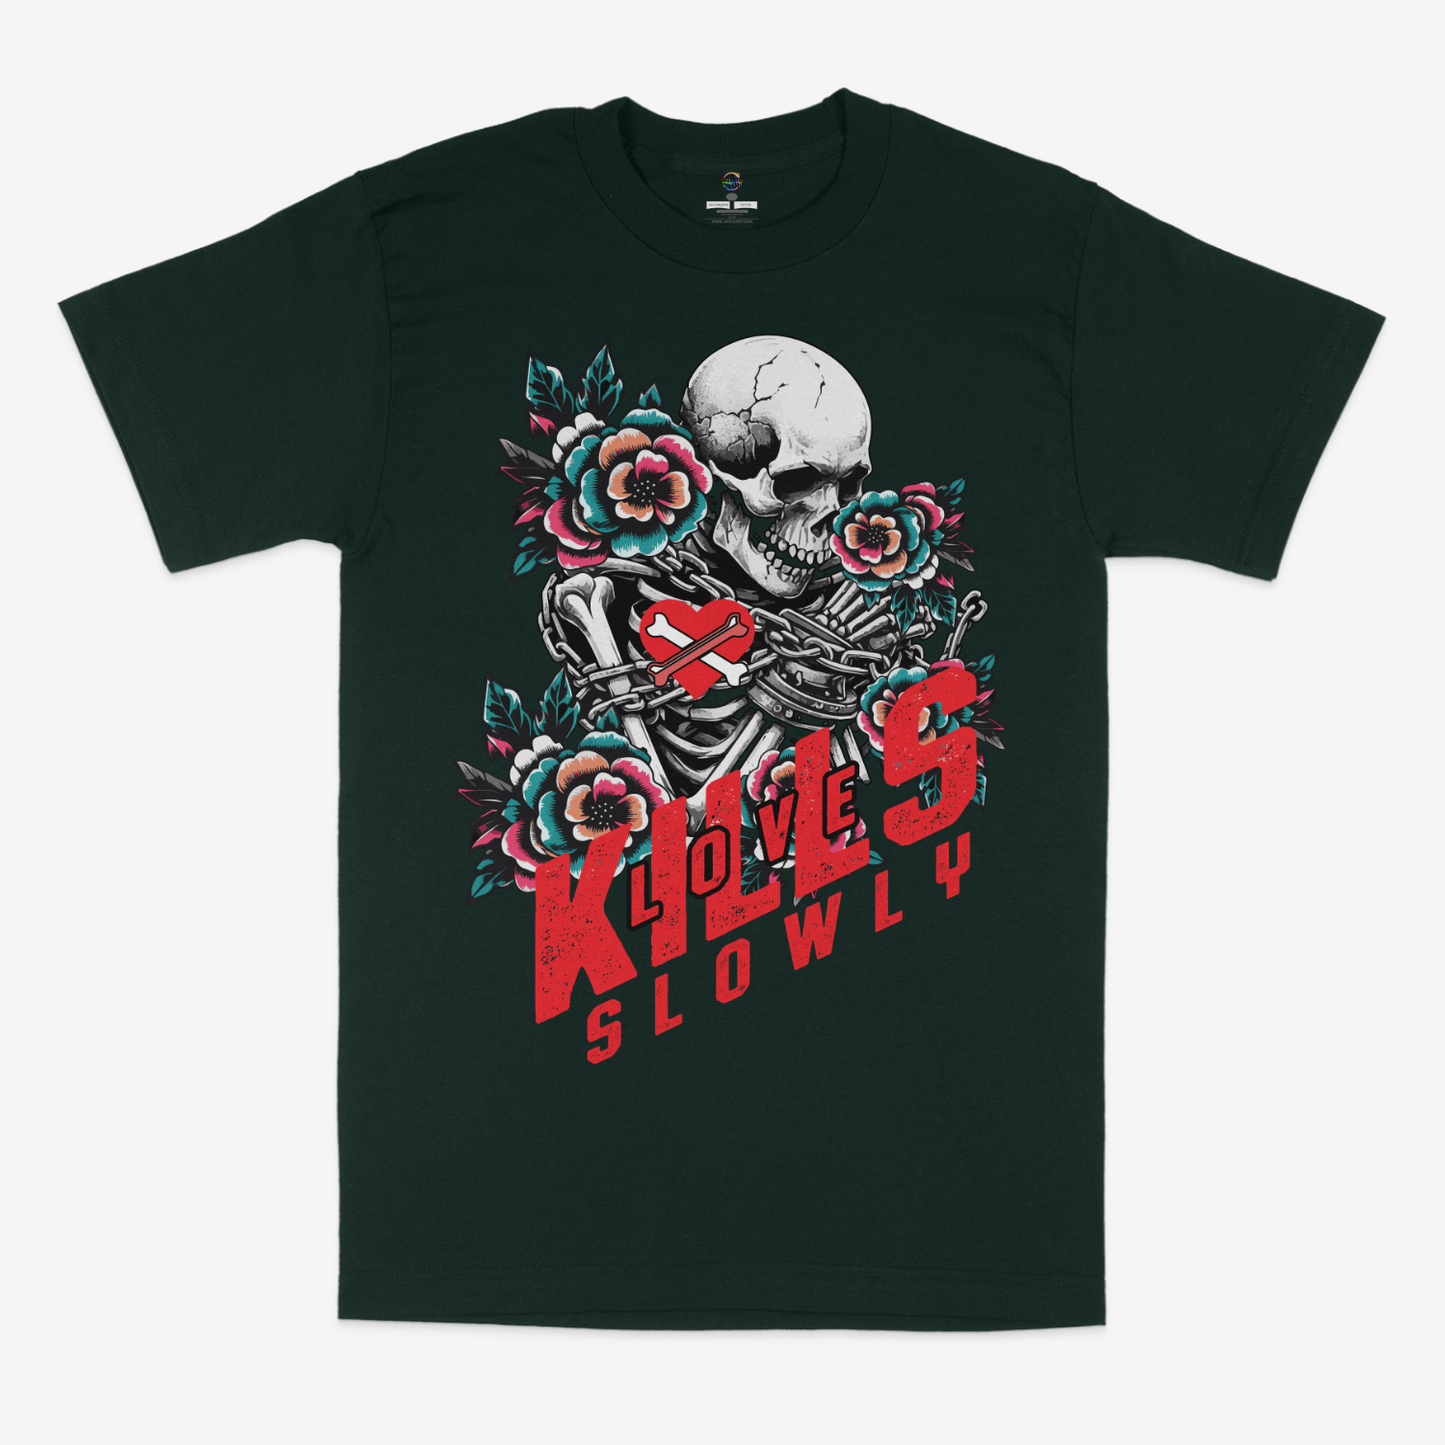 Love Kills Slowly Unisex graphic T-Shirt